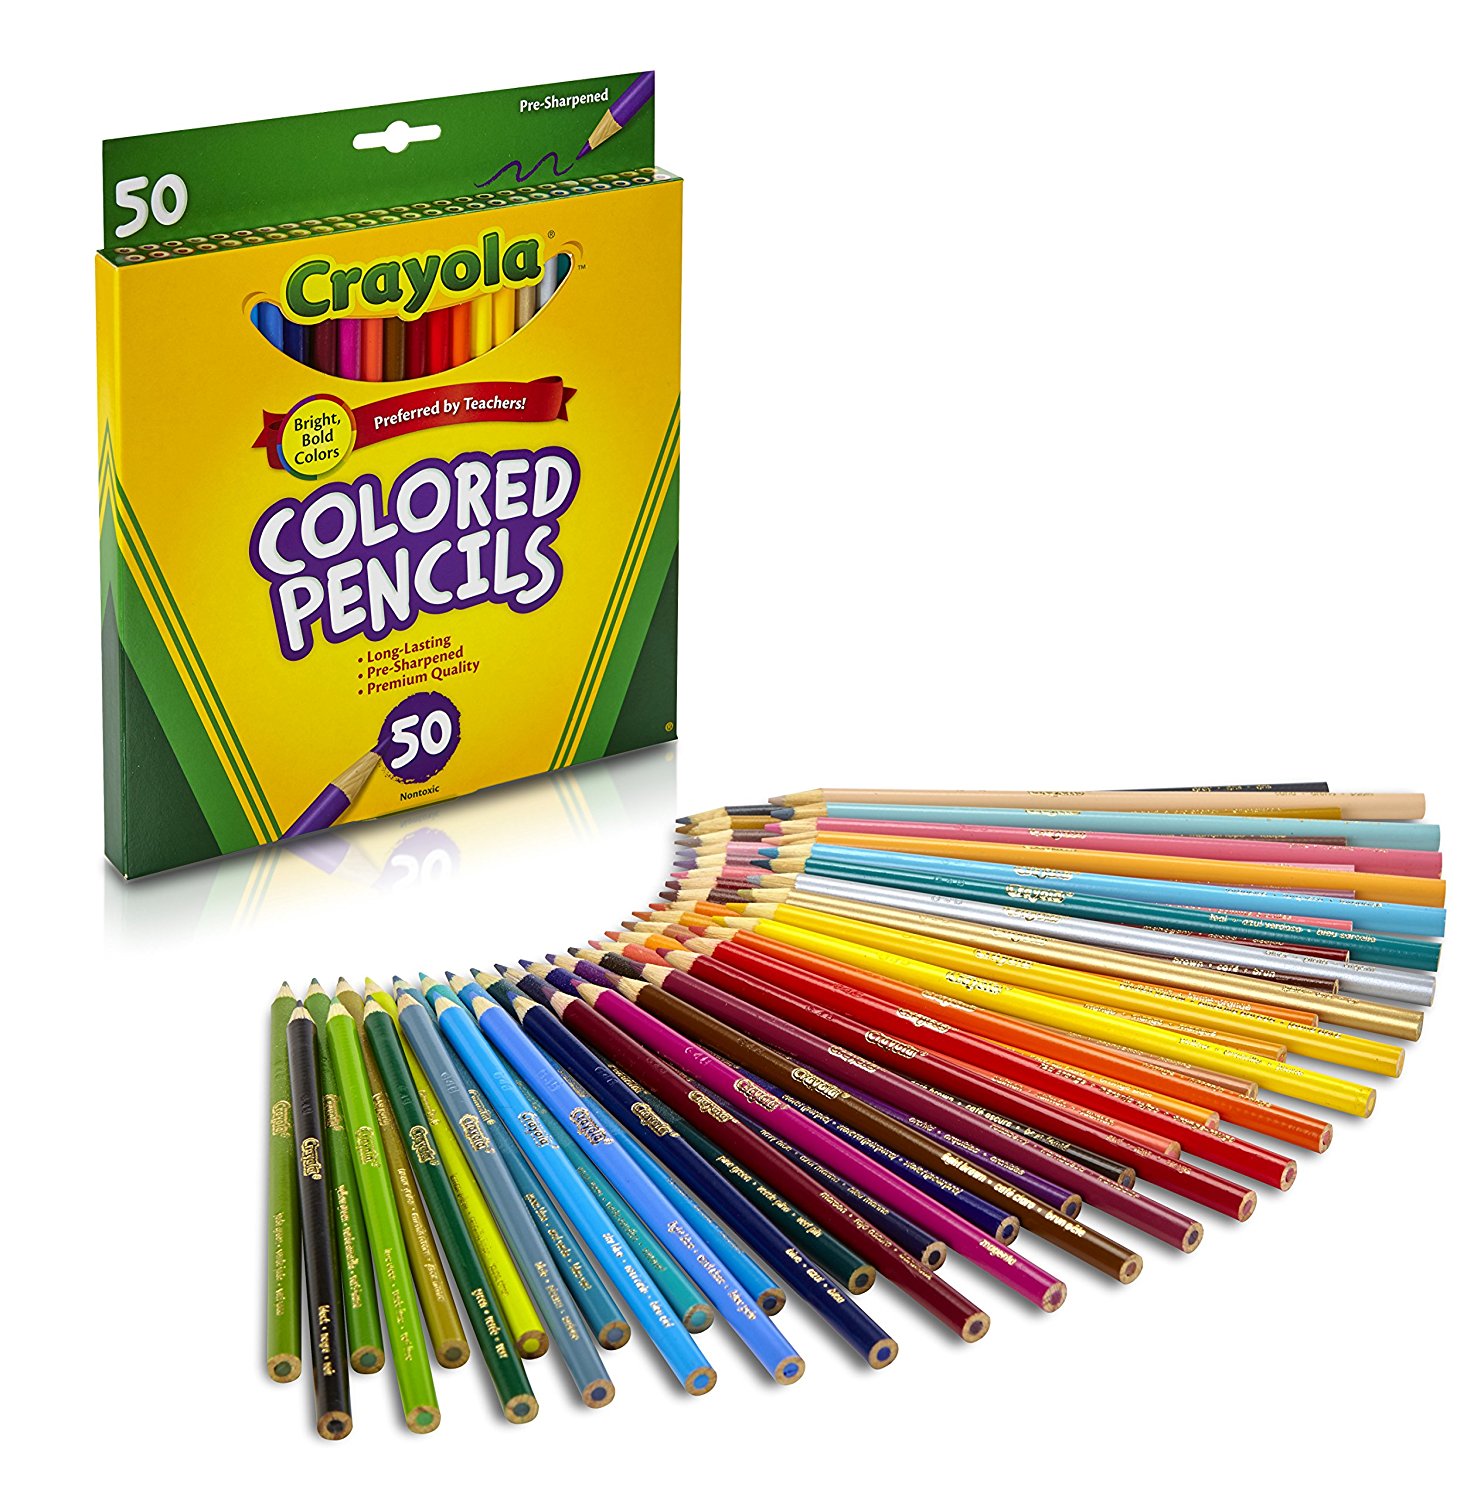 Amazon.com: Crayola Colored Pencils, 50 Count, Adult Coloring: Toys ...